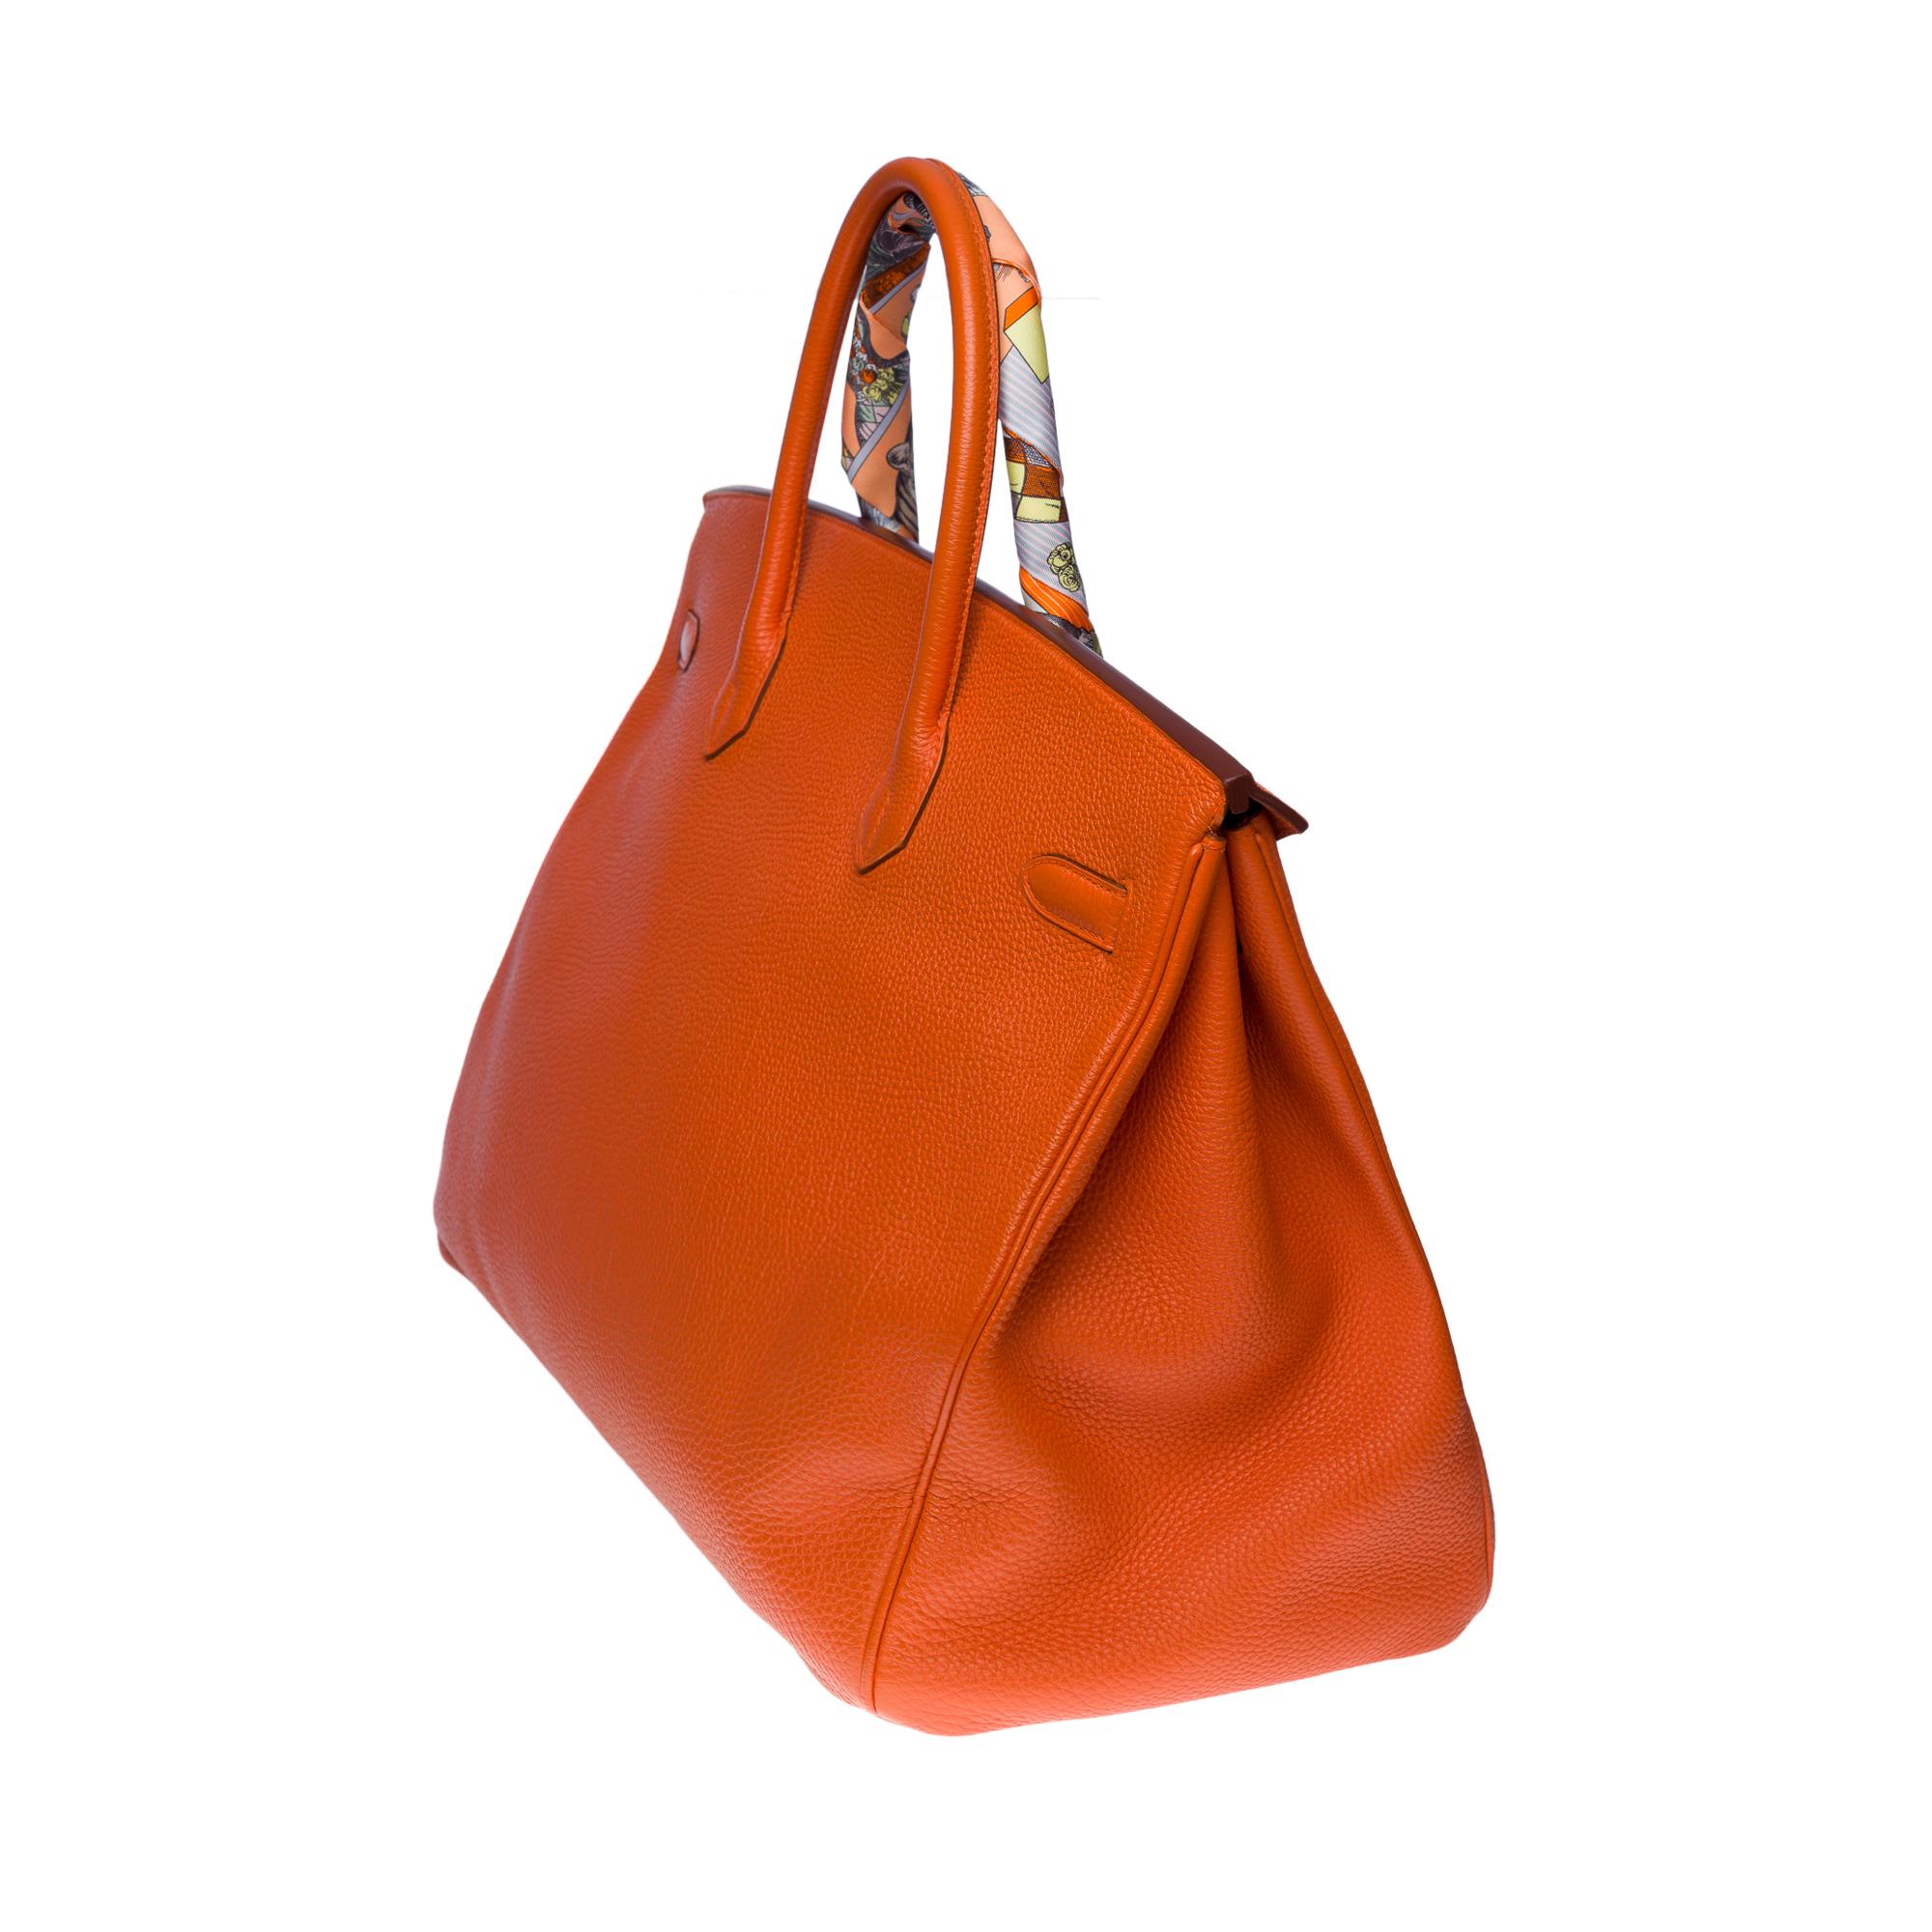 Stunning Hermes Birkin 40cm handbag in Orange Terre battue Togo leather, SHW 1